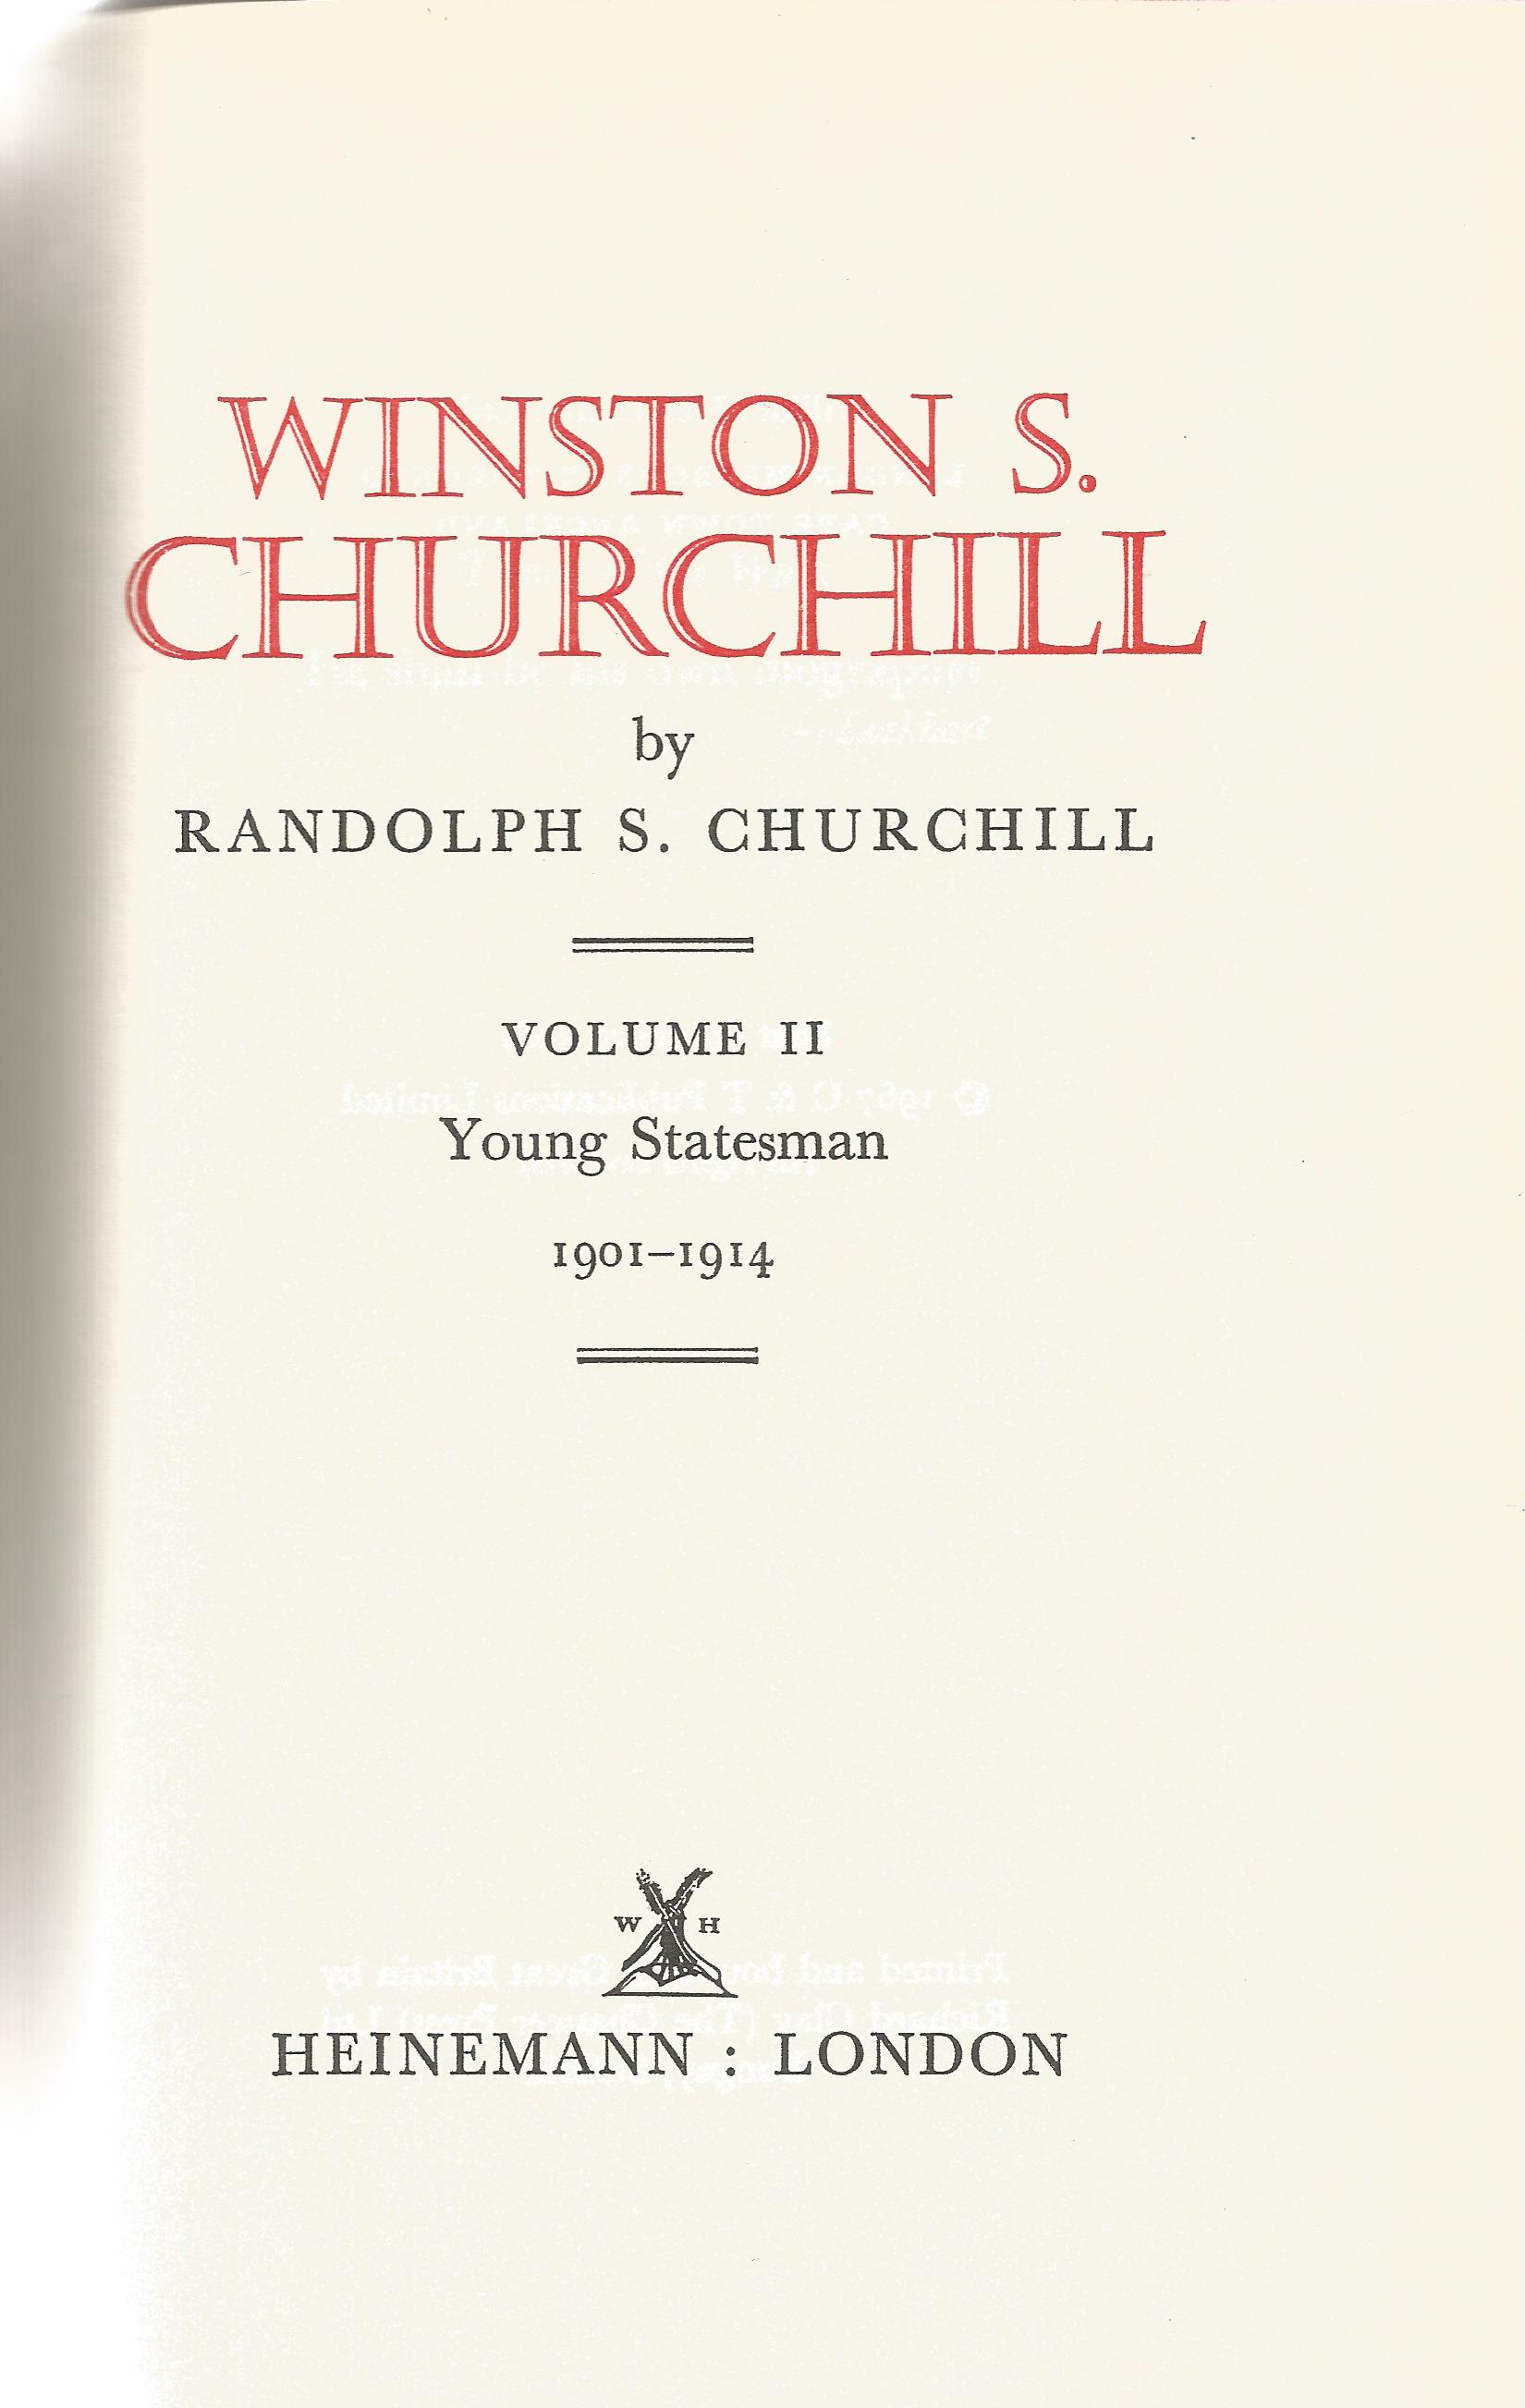 Winston S Churchill Young Statesman vol II by Randolph S Churchill 1967 First Edition Hardback - Image 2 of 3